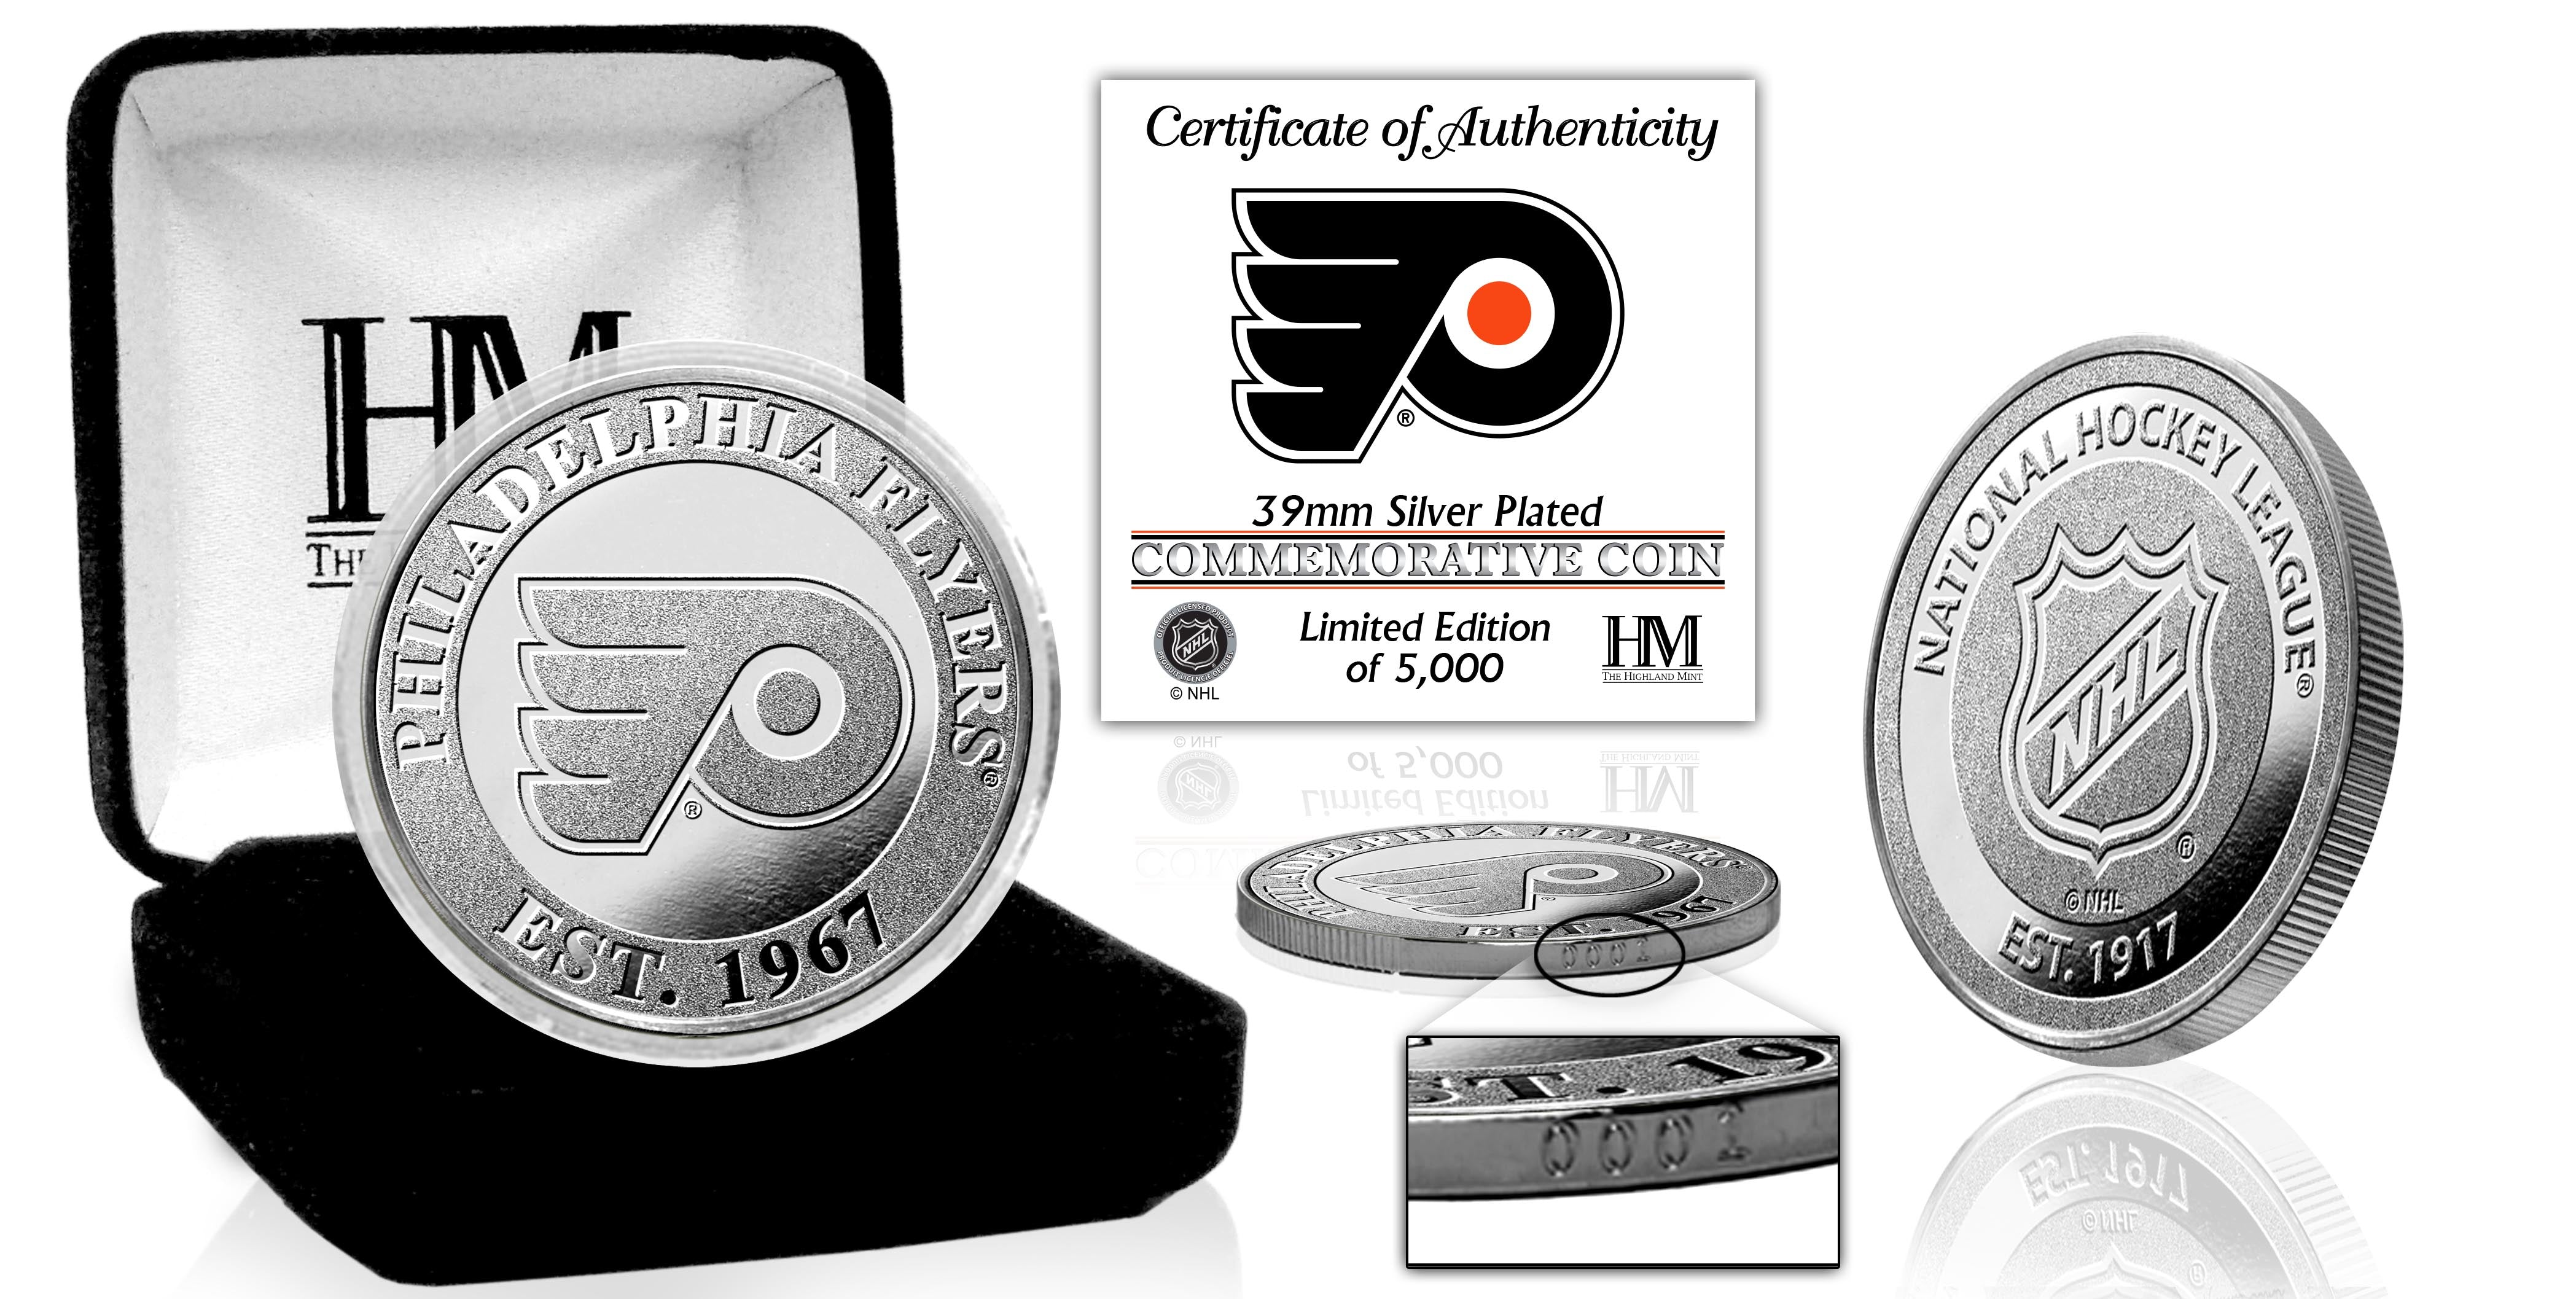 Philadelphia Flyers Silver Mint Coin